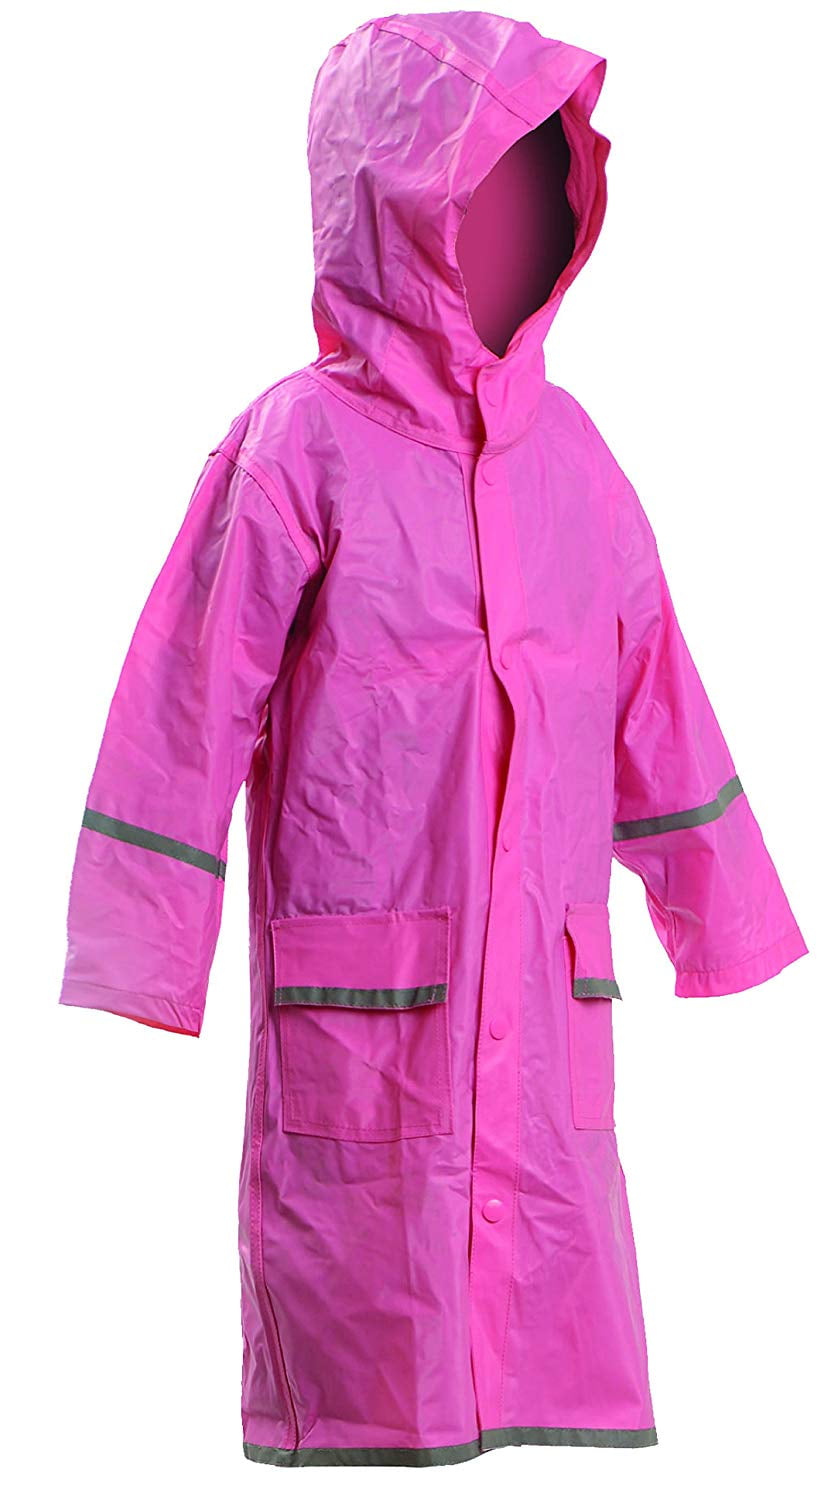 DAWNTUNG Kids Lightweight Waterproof Rain Jacket Zip Up Hooded Rain Coat with Reflective Strips Pink Rabbit 